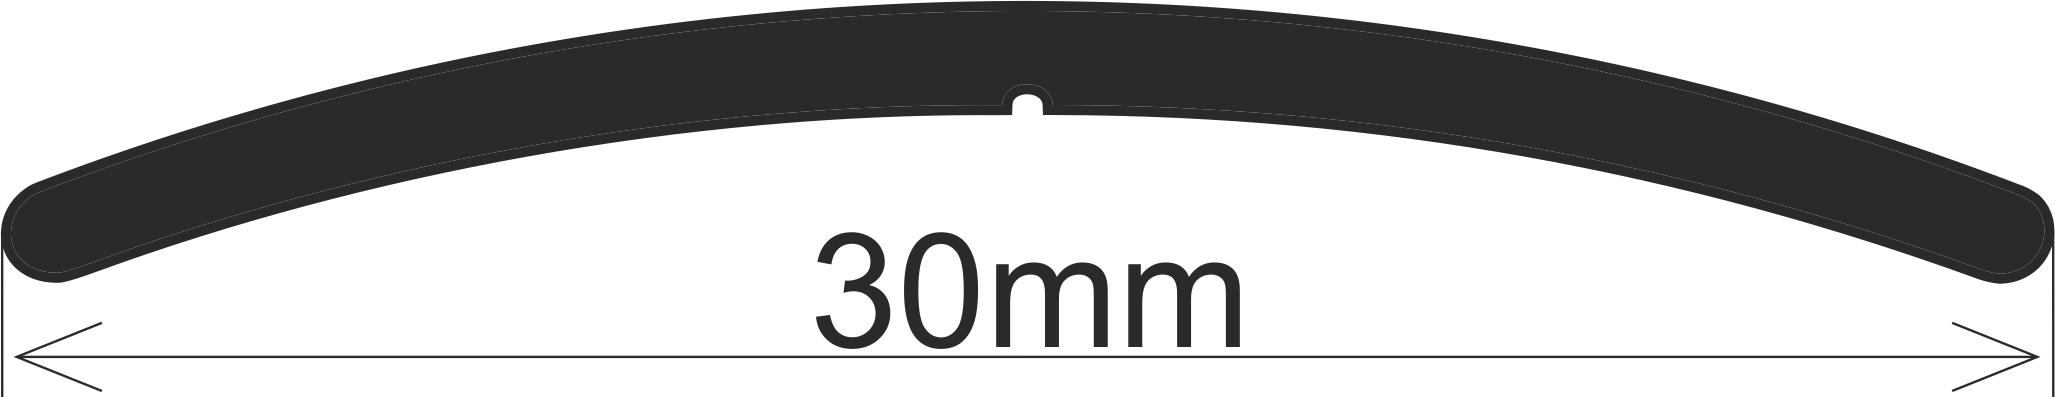 Bohemia profil pechodov lita samolepc 30mm pvc flie BL 2,7m